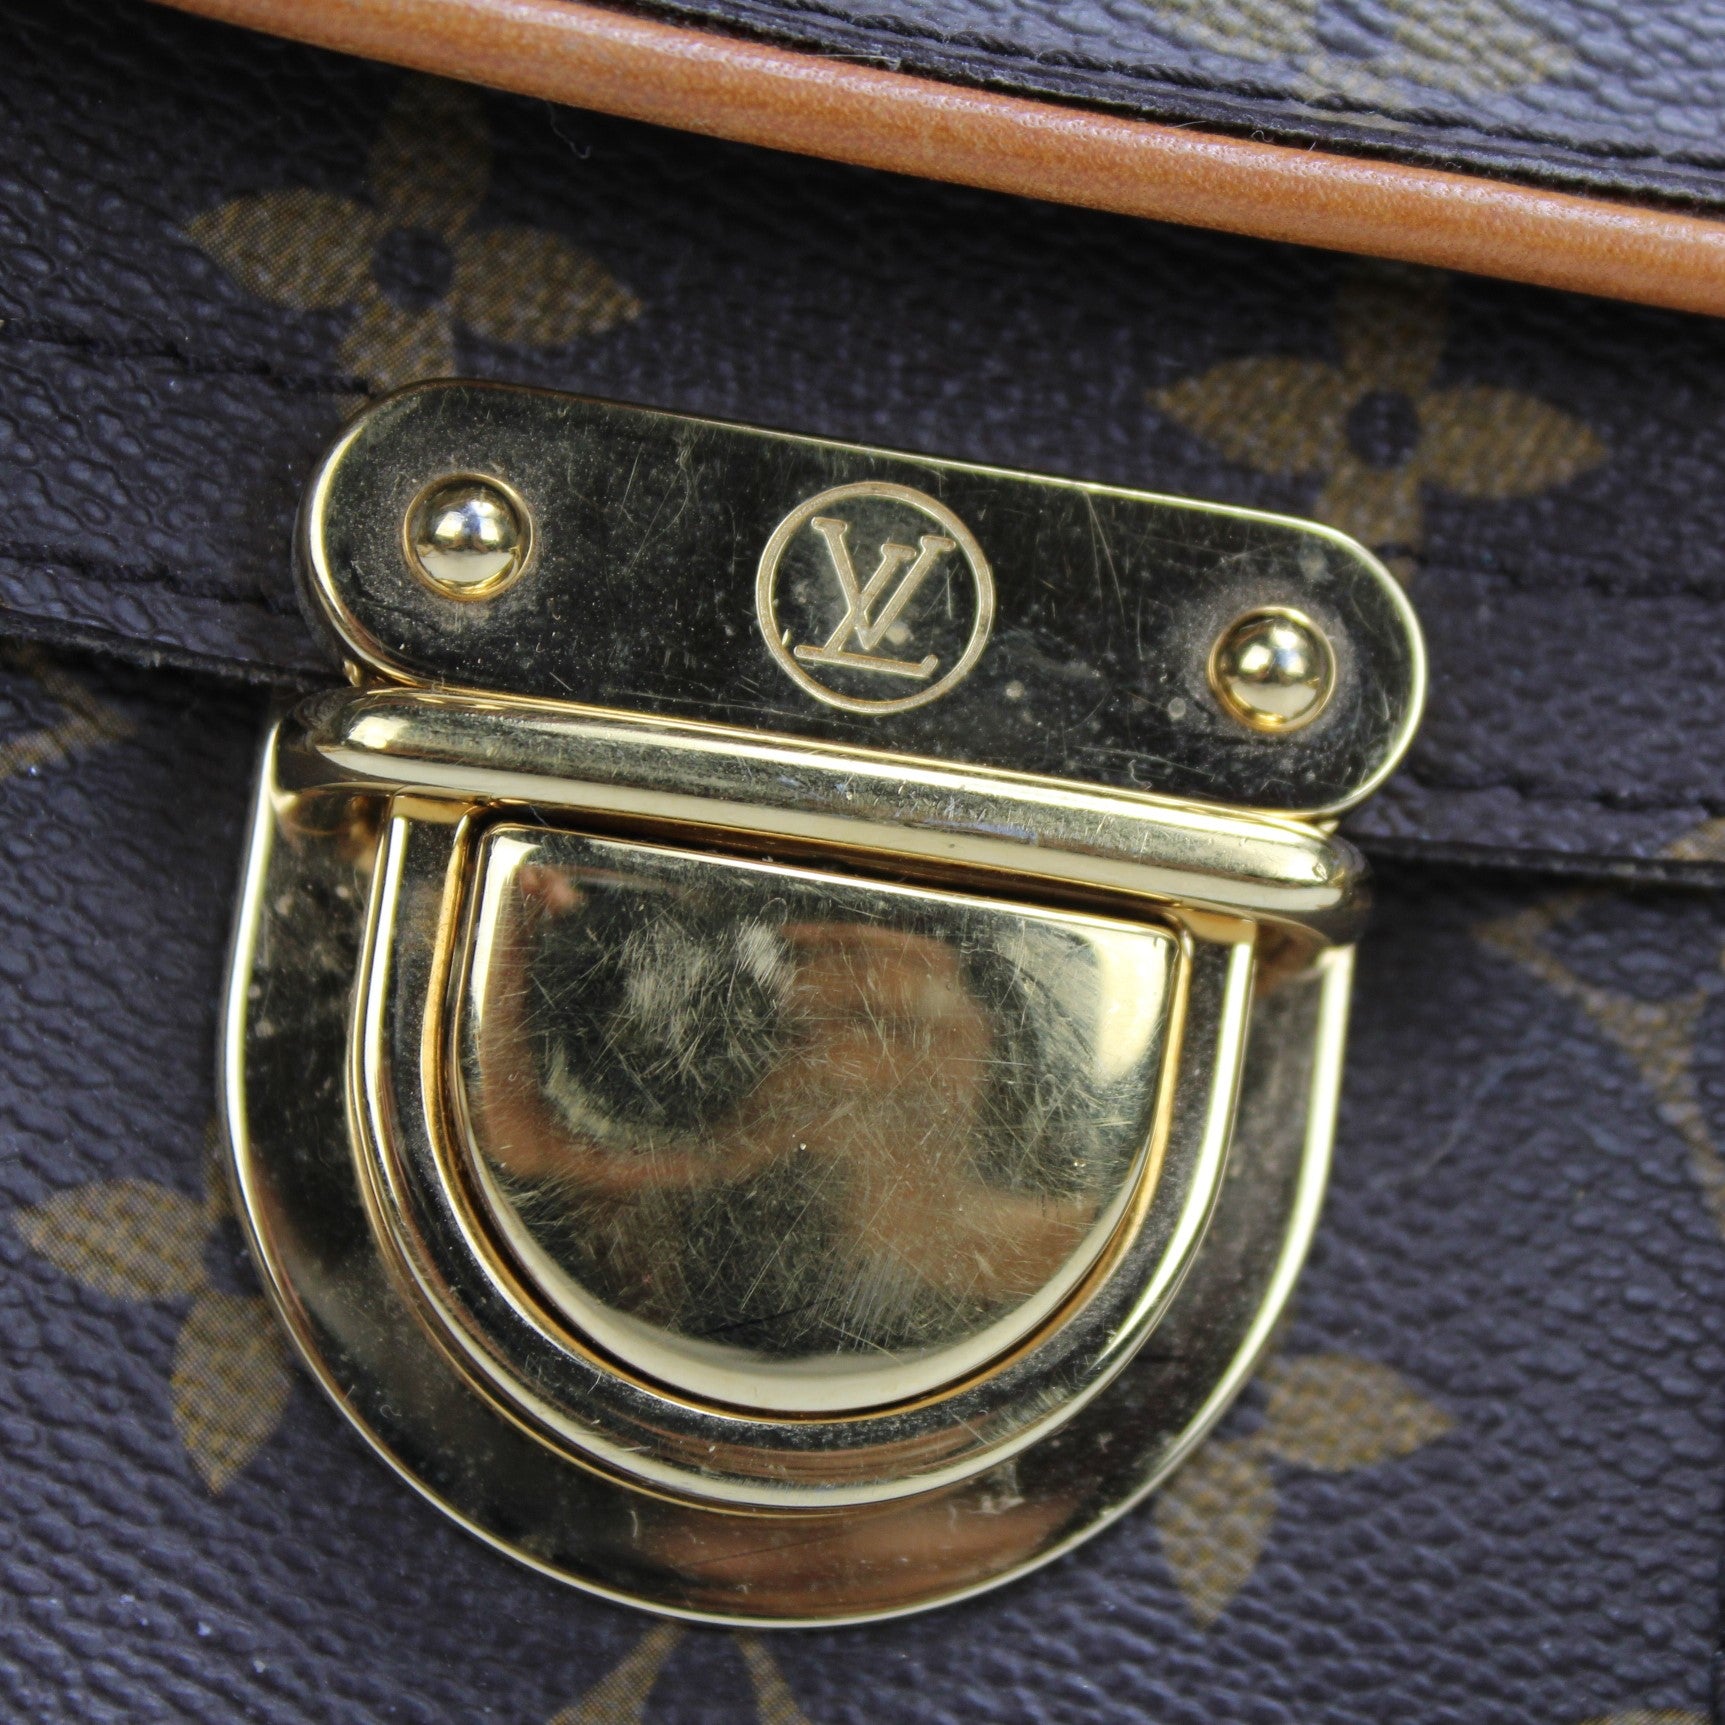 Hudson PM Monogram (PL2) – Keeks Designer Handbags